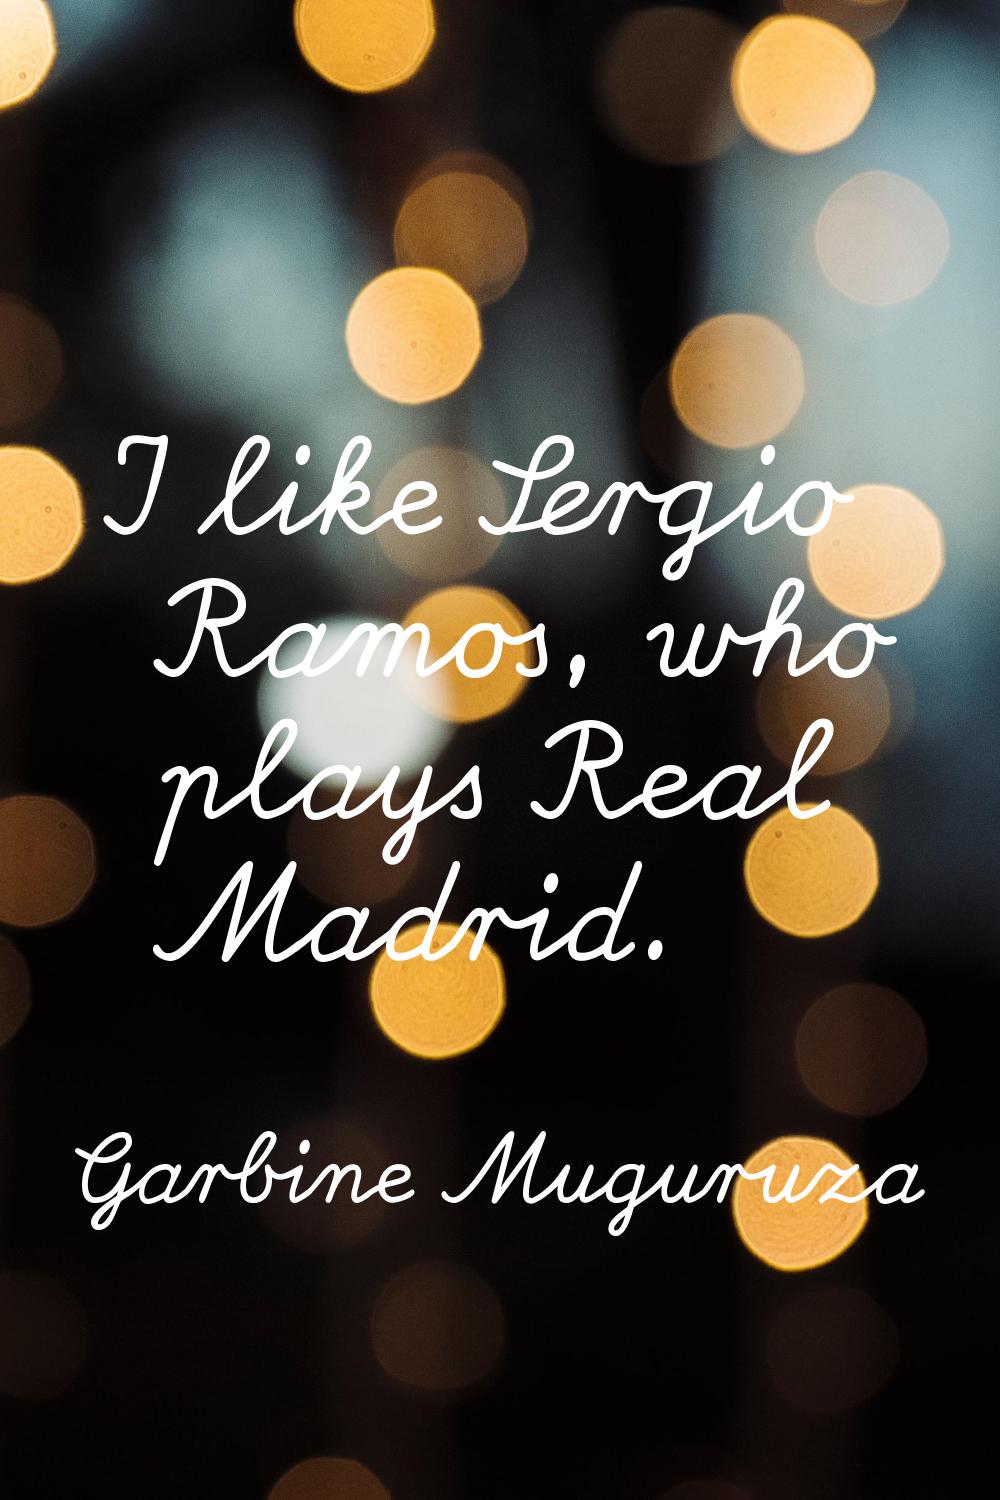 I like Sergio Ramos, who plays Real Madrid.